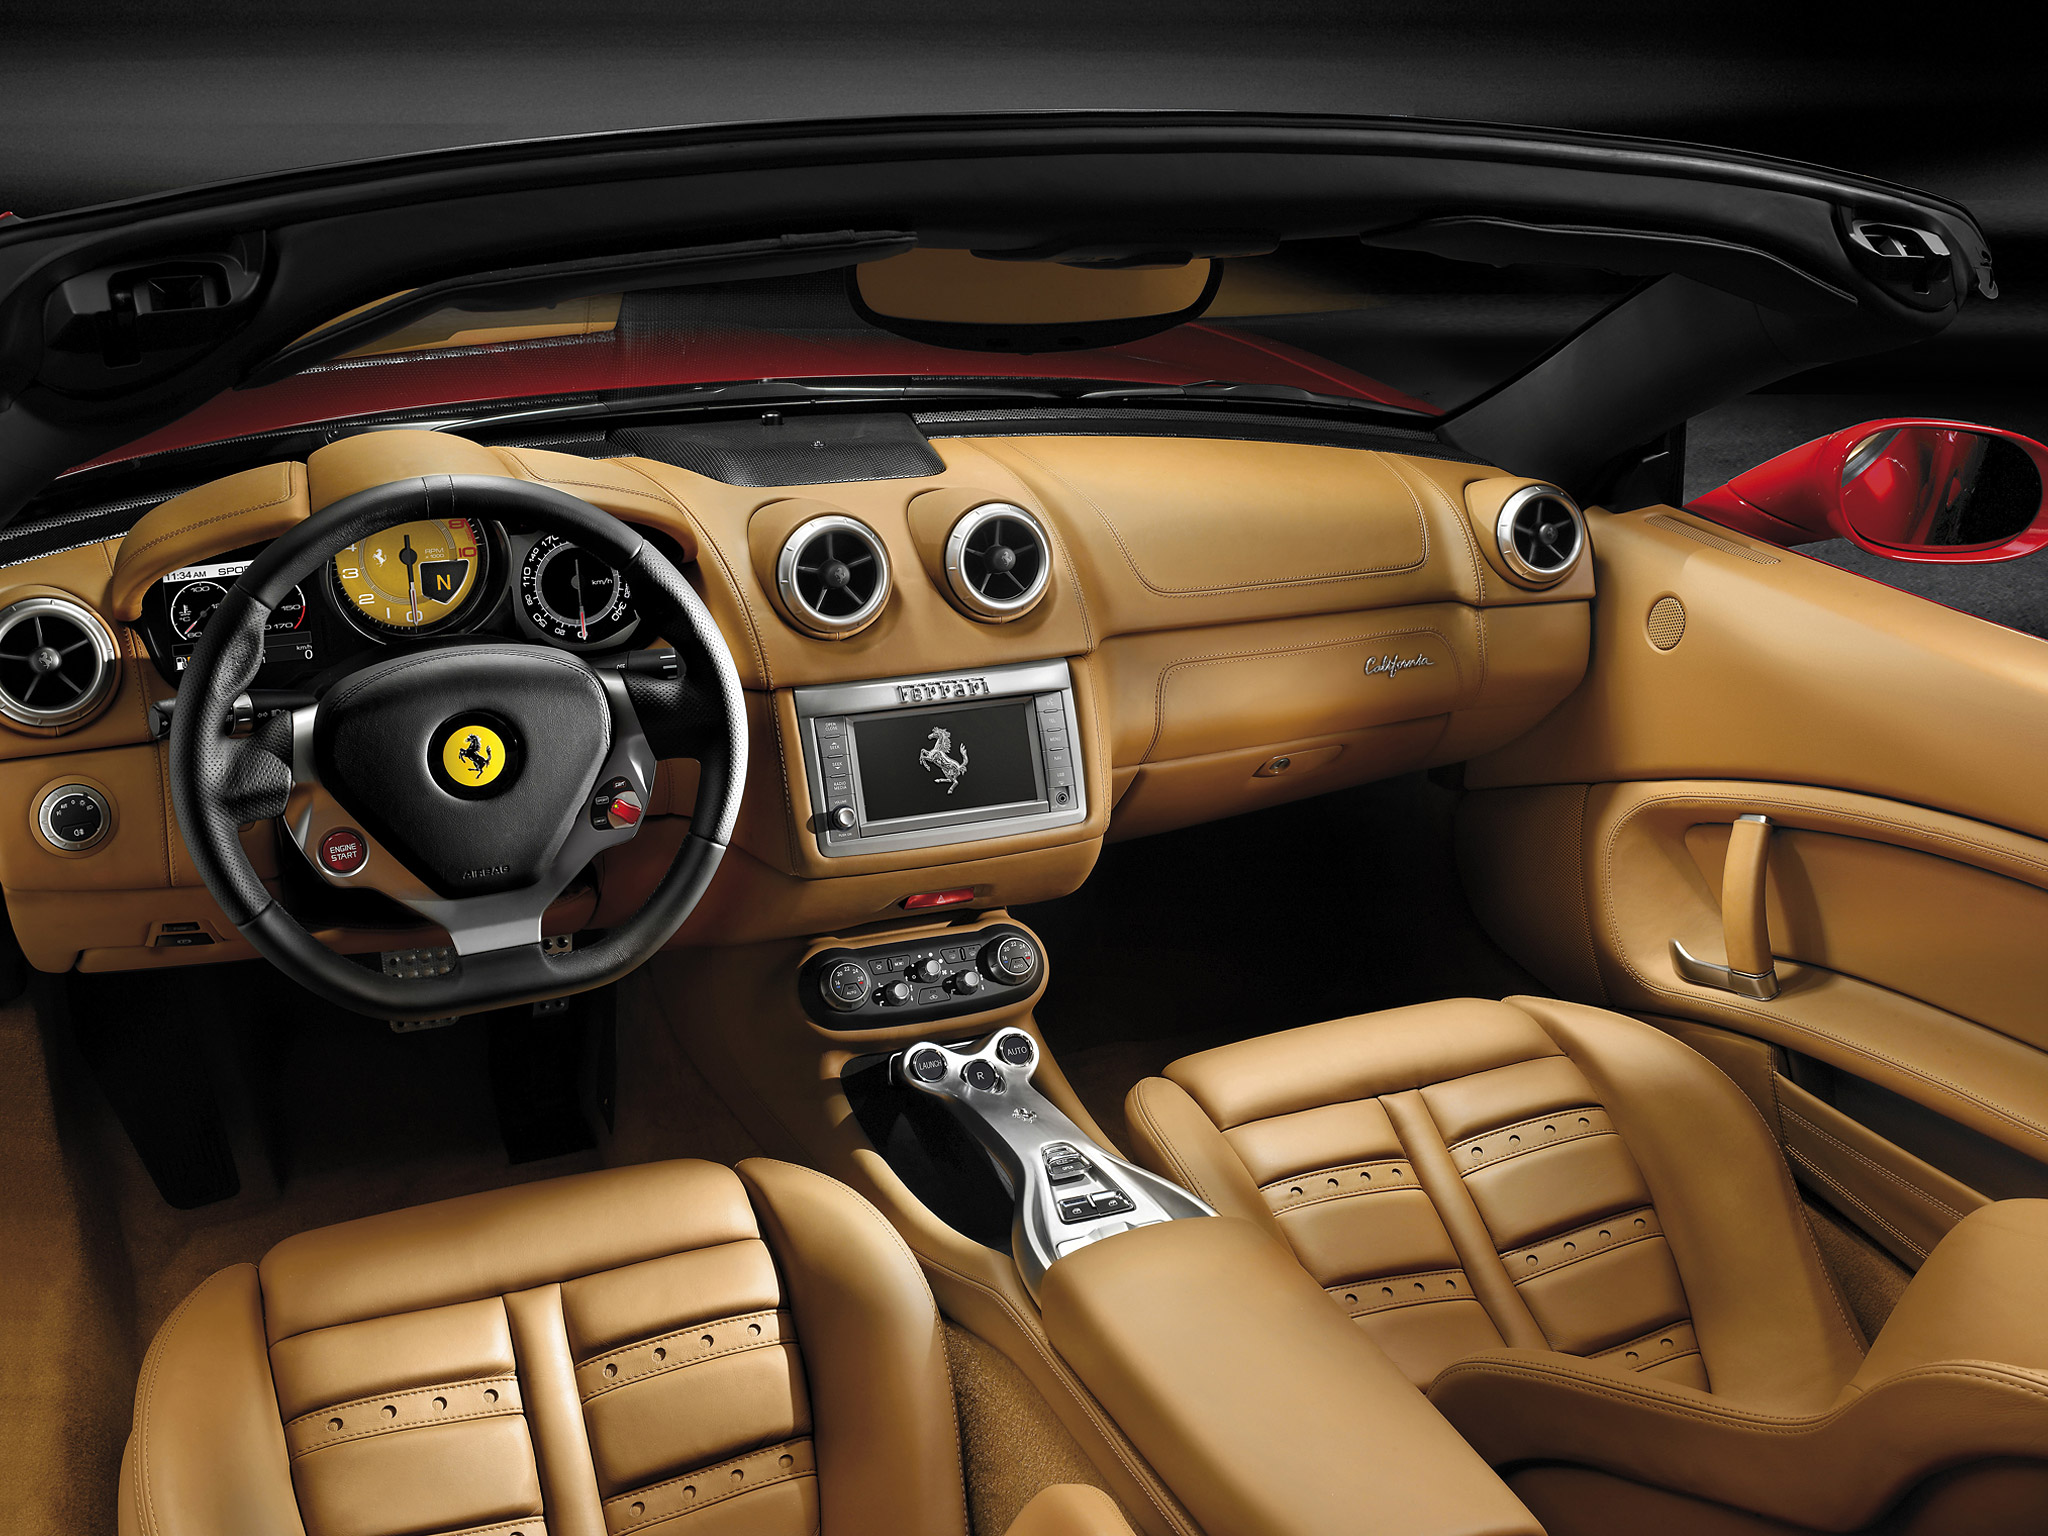  2009 Ferrari California Wallpaper.